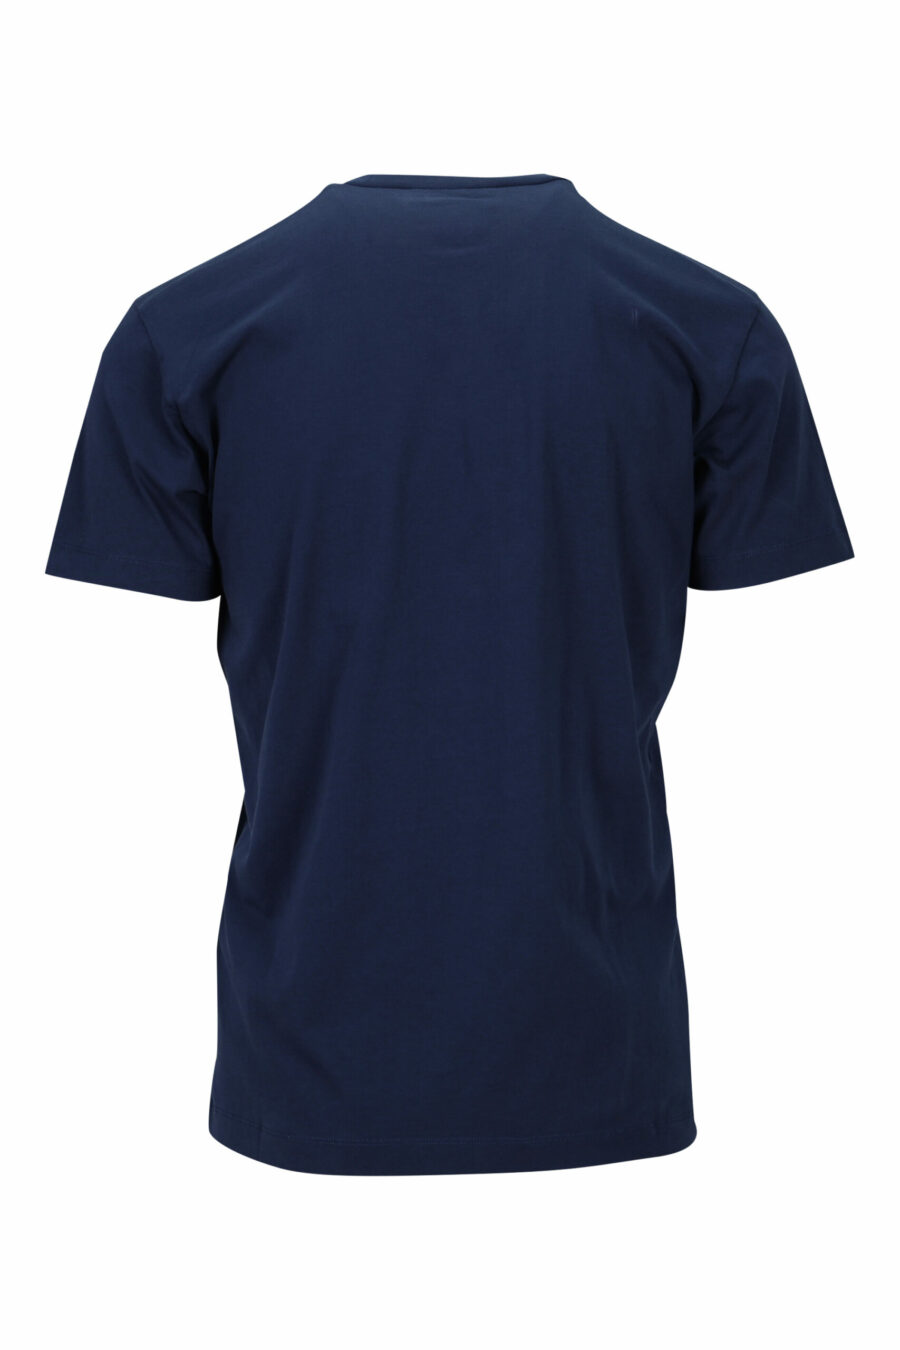 Dunkelblaues T-shirt mit Maxilogo "ceresio 9, milano" - 8054148504915 1 skaliert